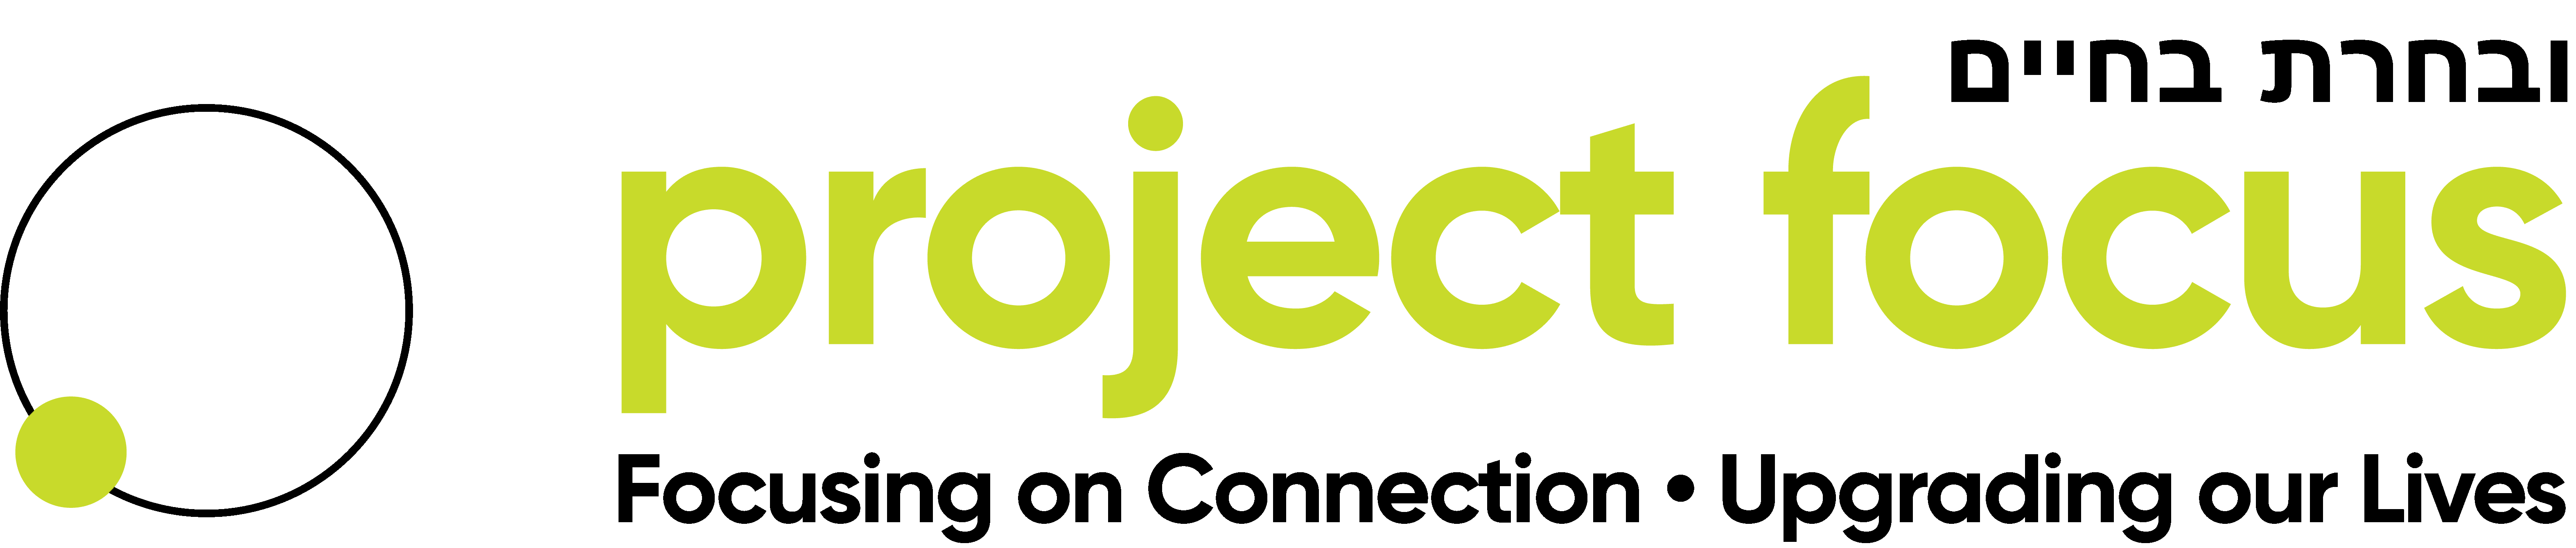 project-focus-logo-02